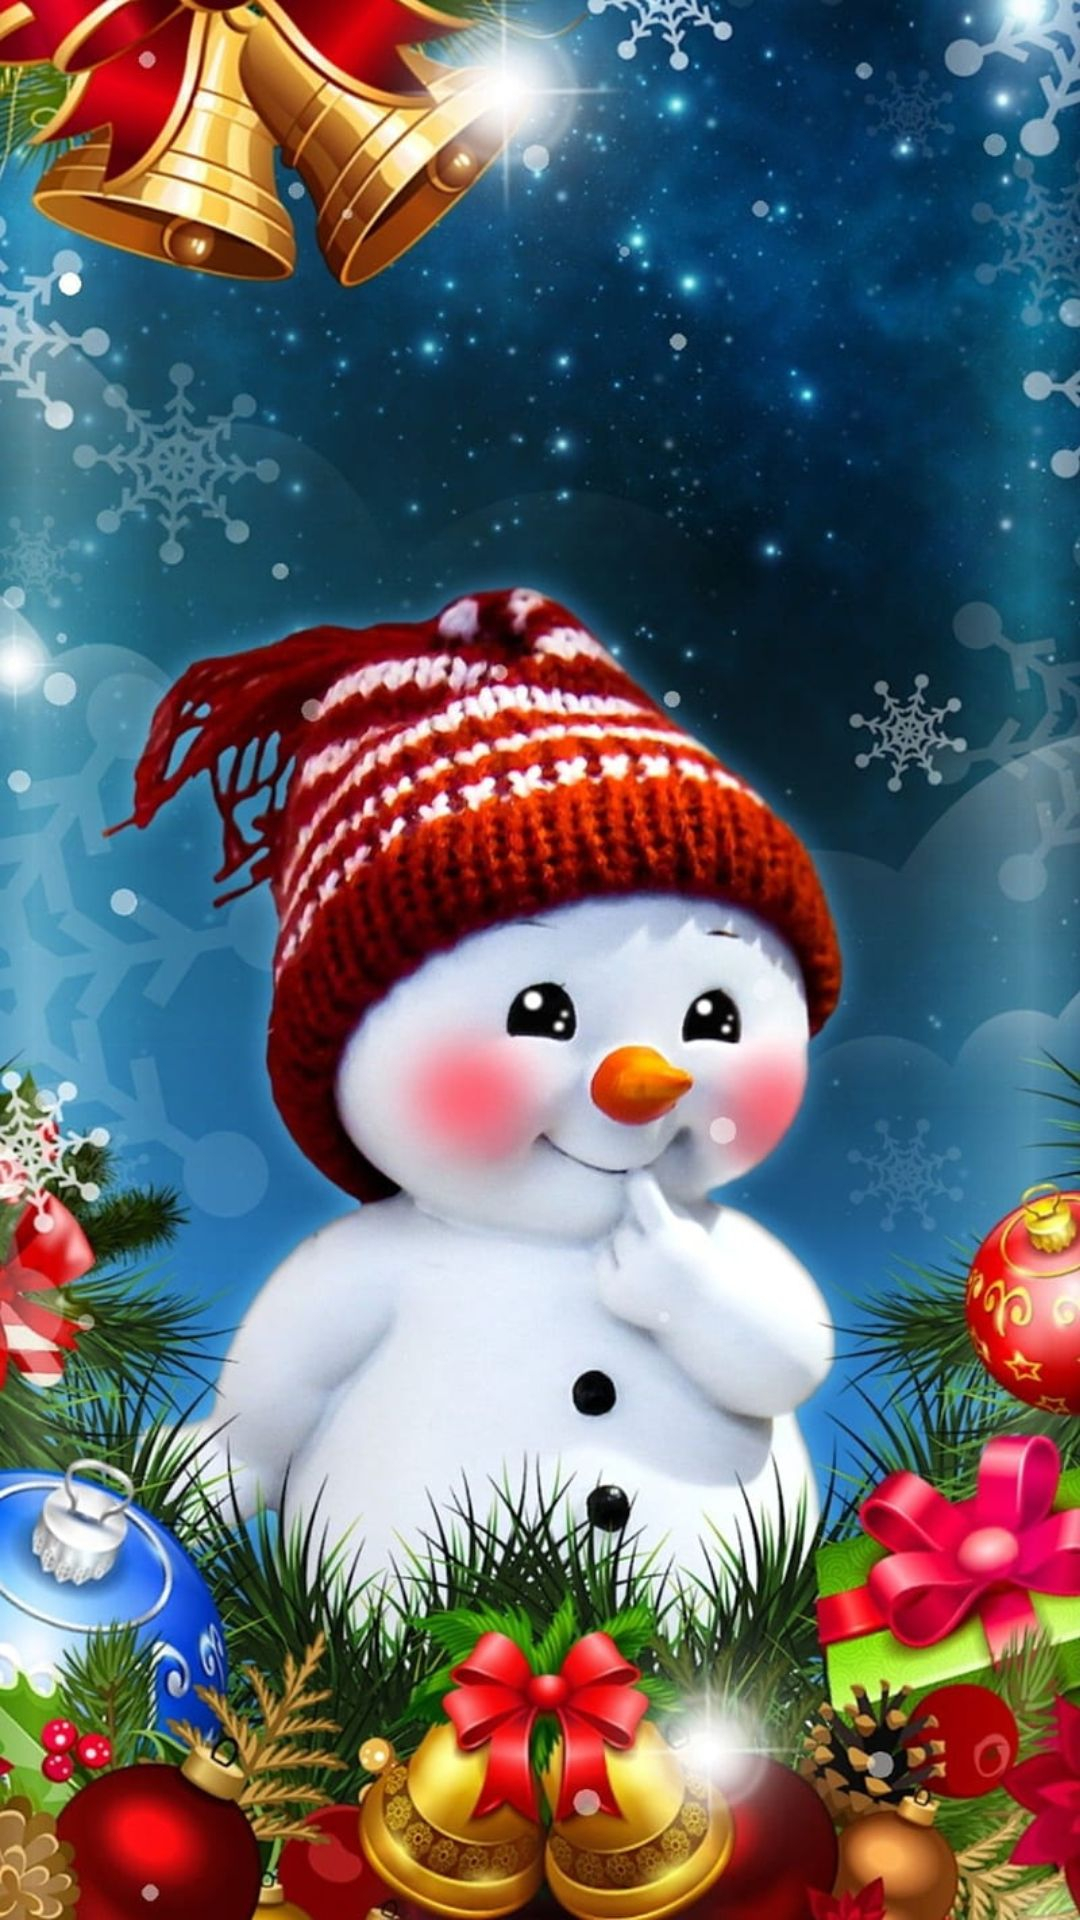 1080x1920 Snowman Wallpapers [Desktop,iPhone,Laptop,Mobile